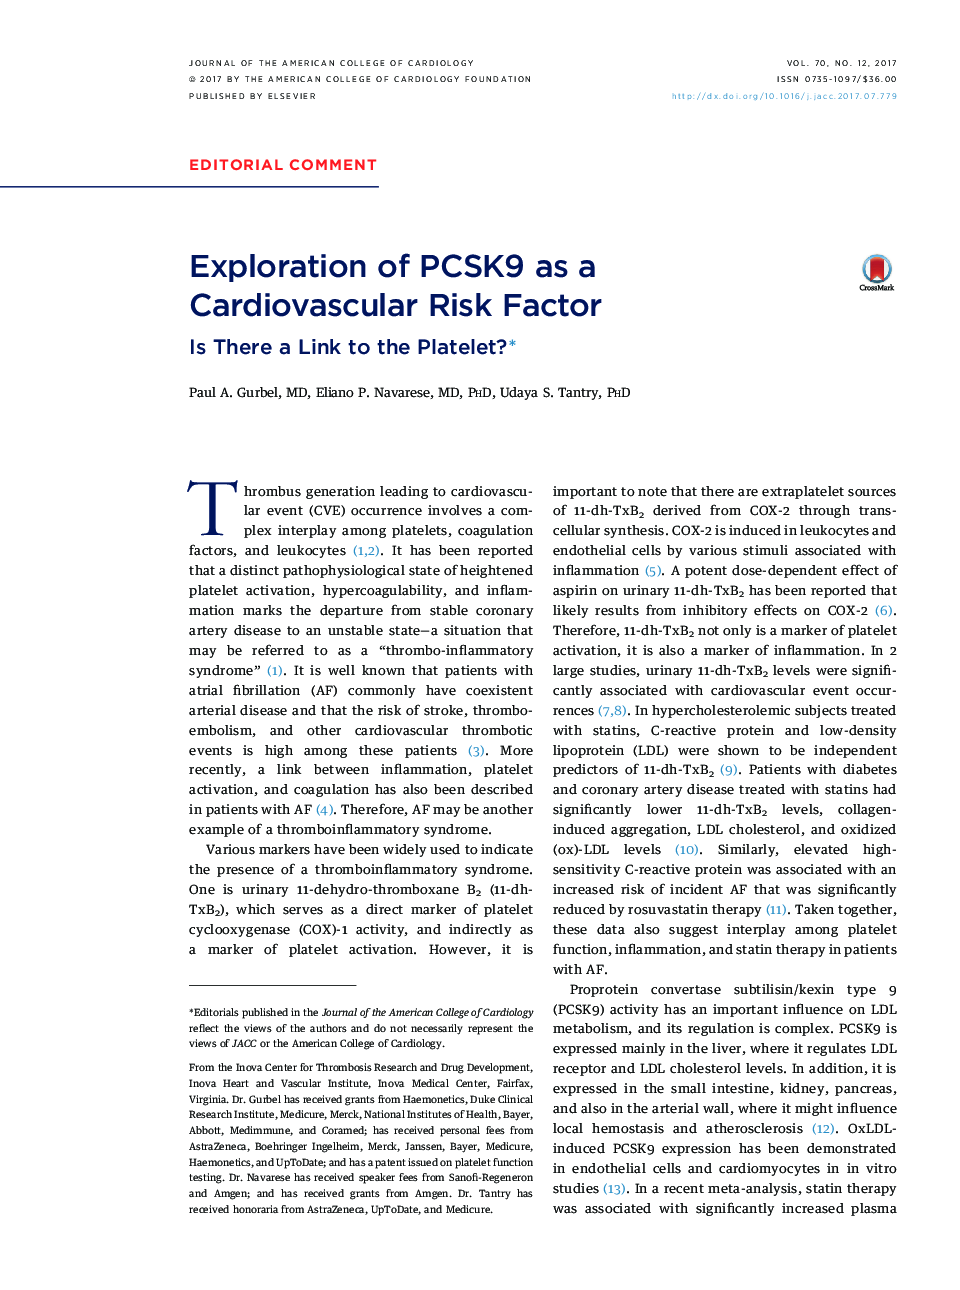 Exploration of PCSK9 as a CardiovascularÂ Risk Factor